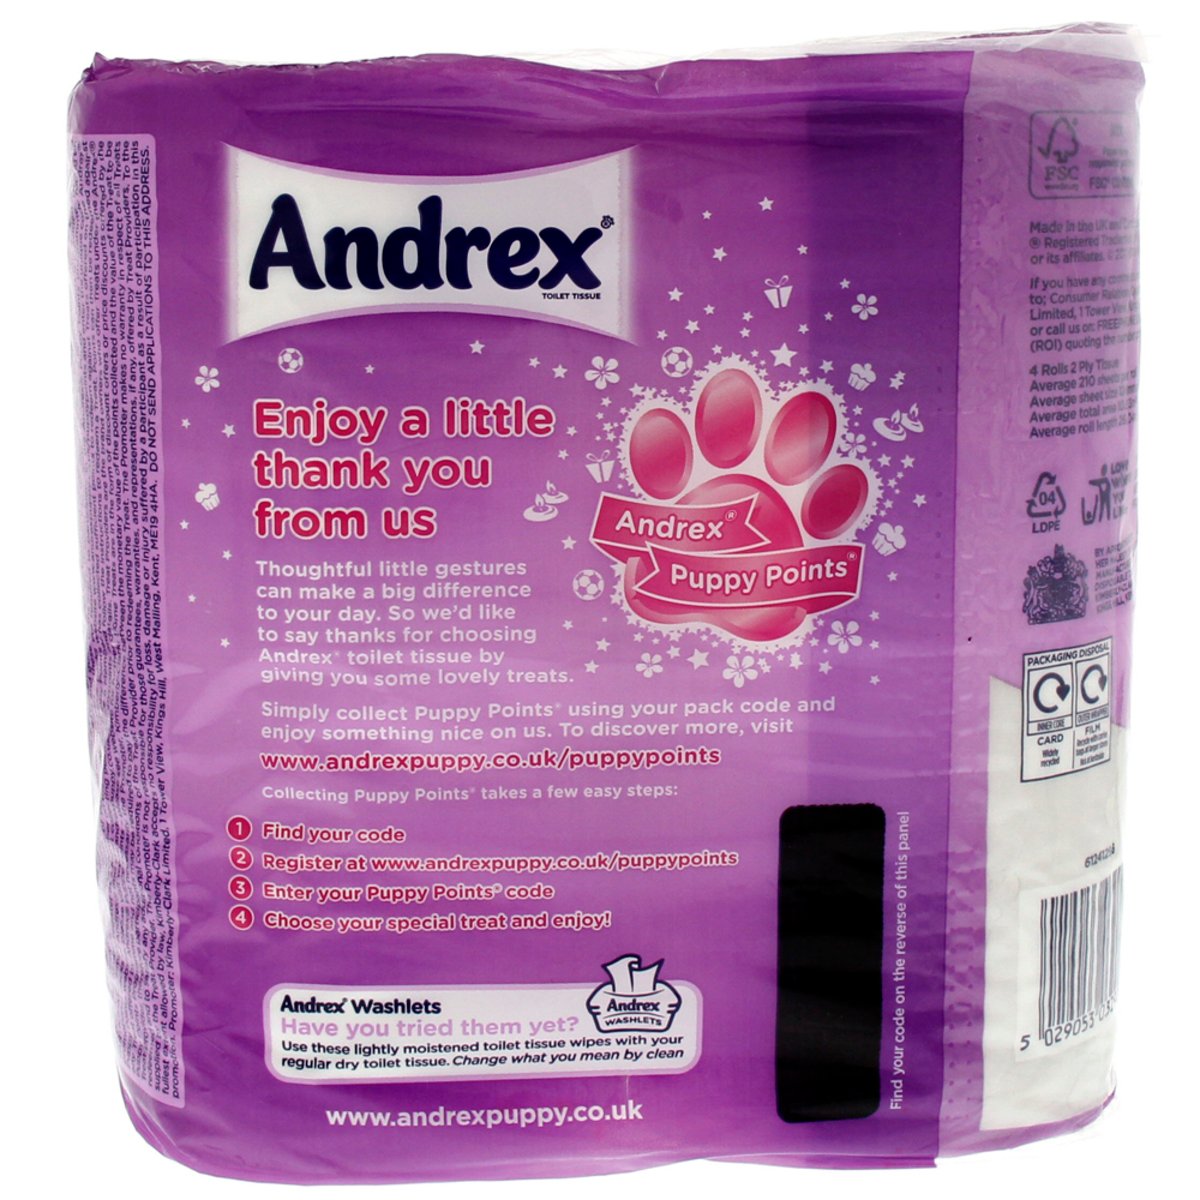 Andrex Toilet Puppy Pattern 4 Rolls